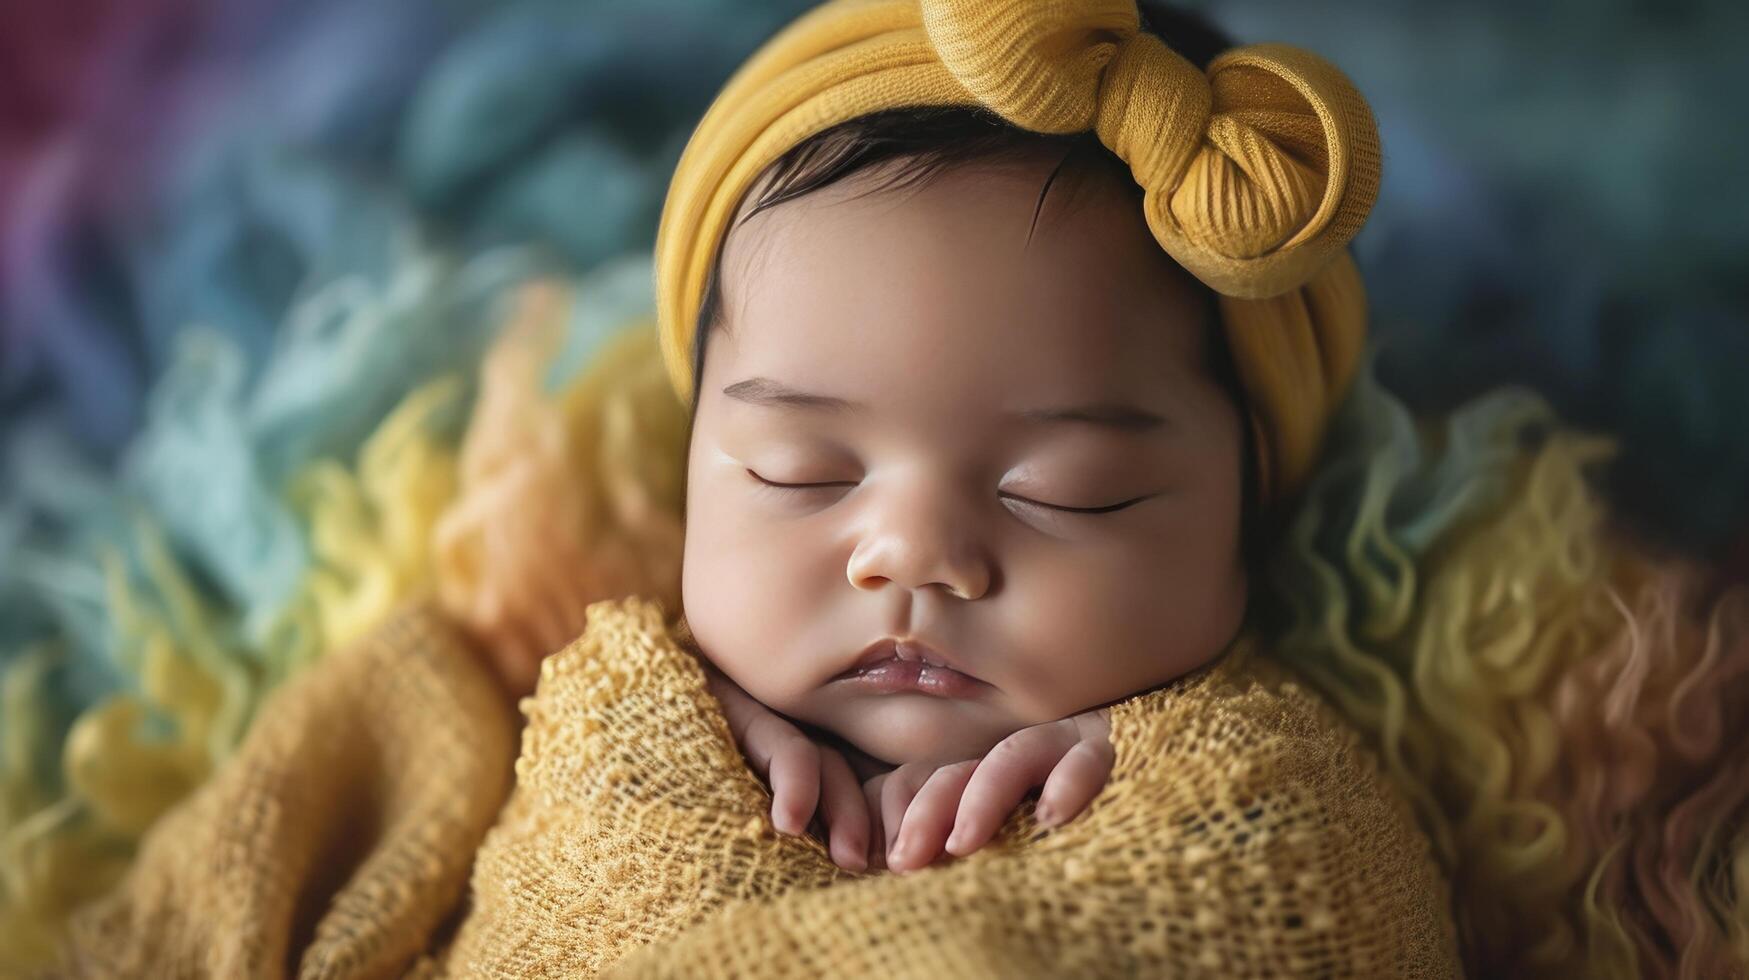 AI generated latio american baby photo